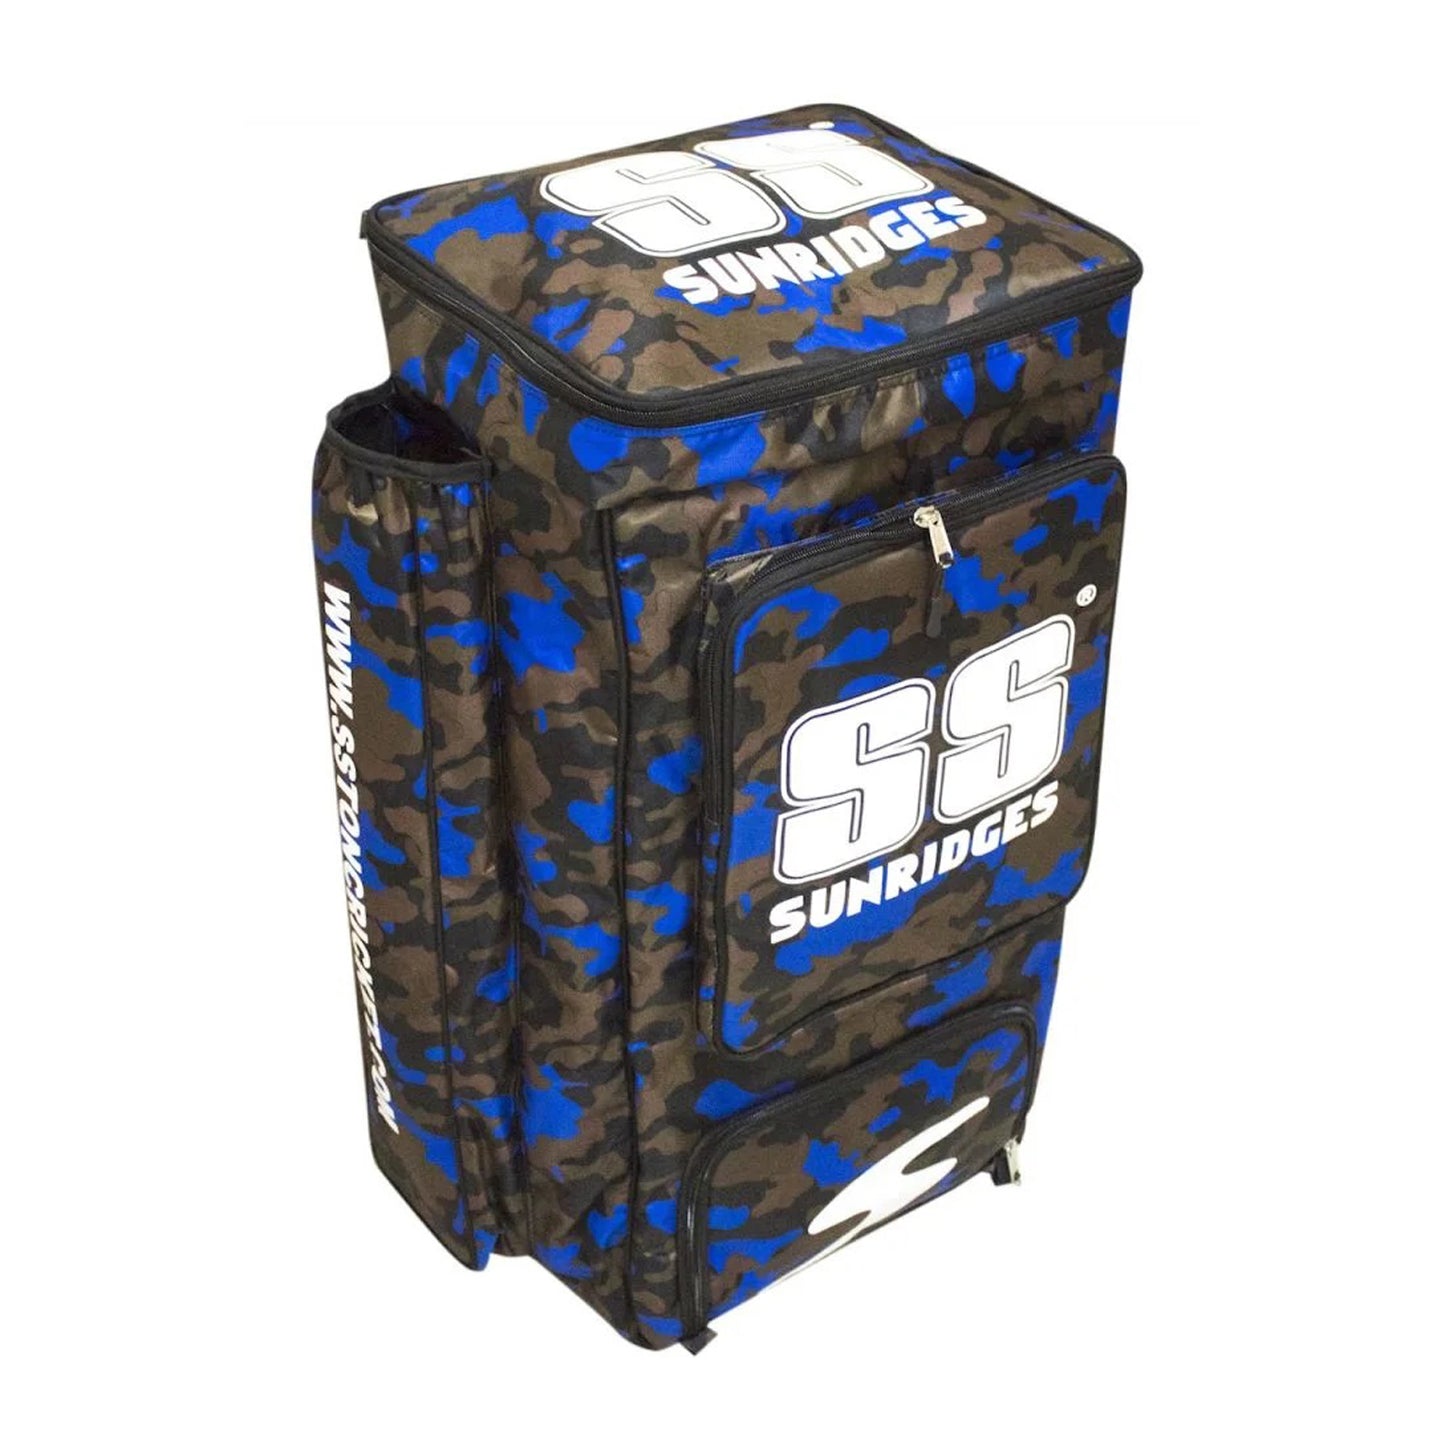 SS Camo Pack Duffle Blue Cricket Kit Bag - Best Price online Prokicksports.com